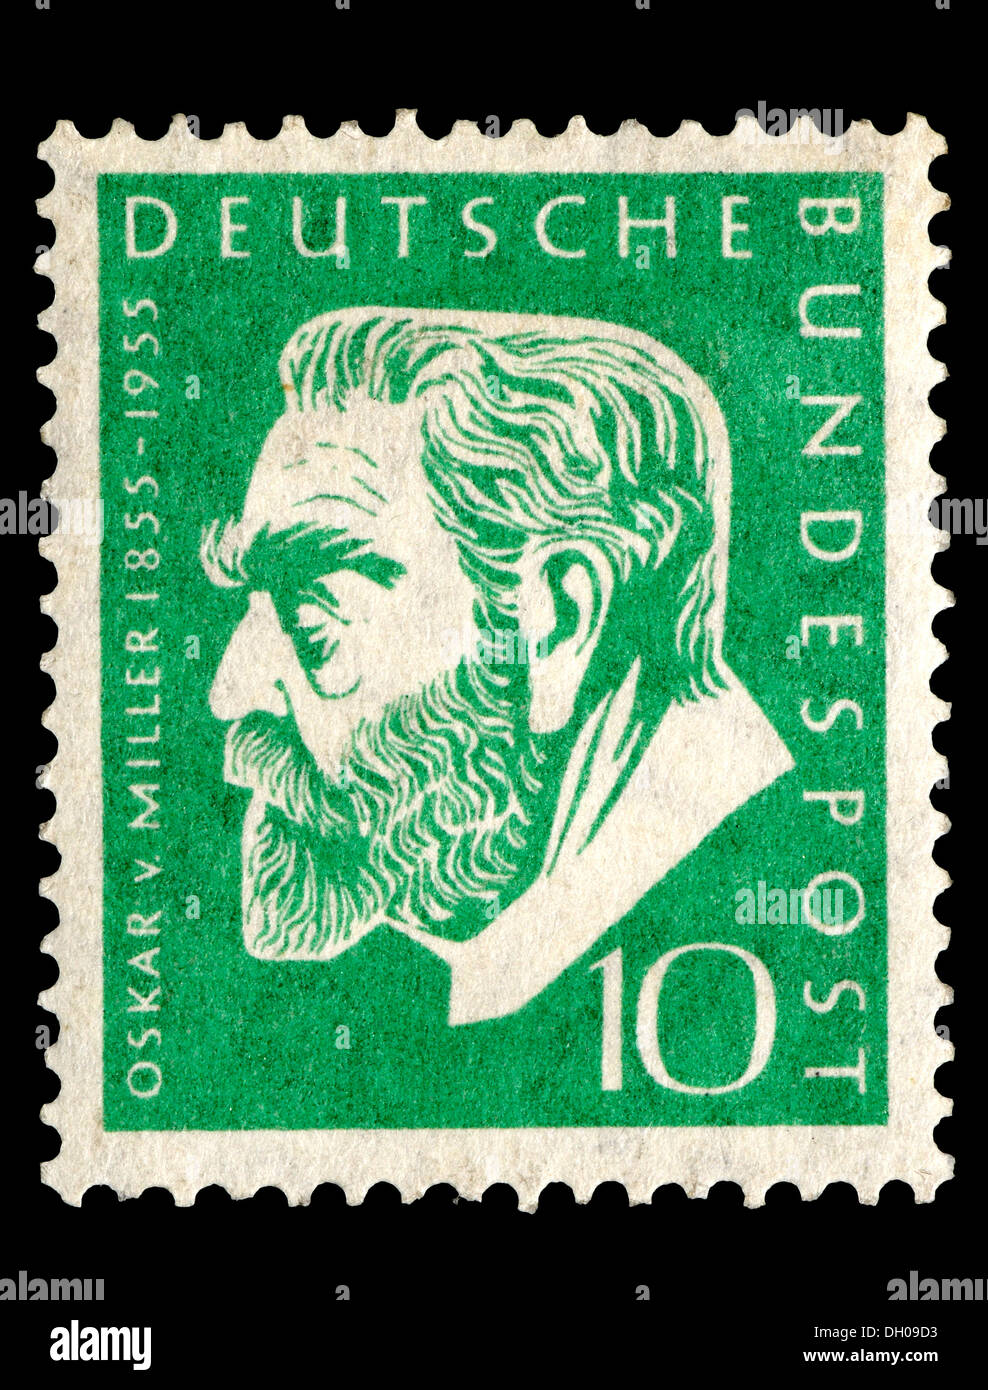 Portrait of Oskar von Miller (1855-1934: German engineer and founder of the Deutsches Museum) on German postage stamp. Stock Photo